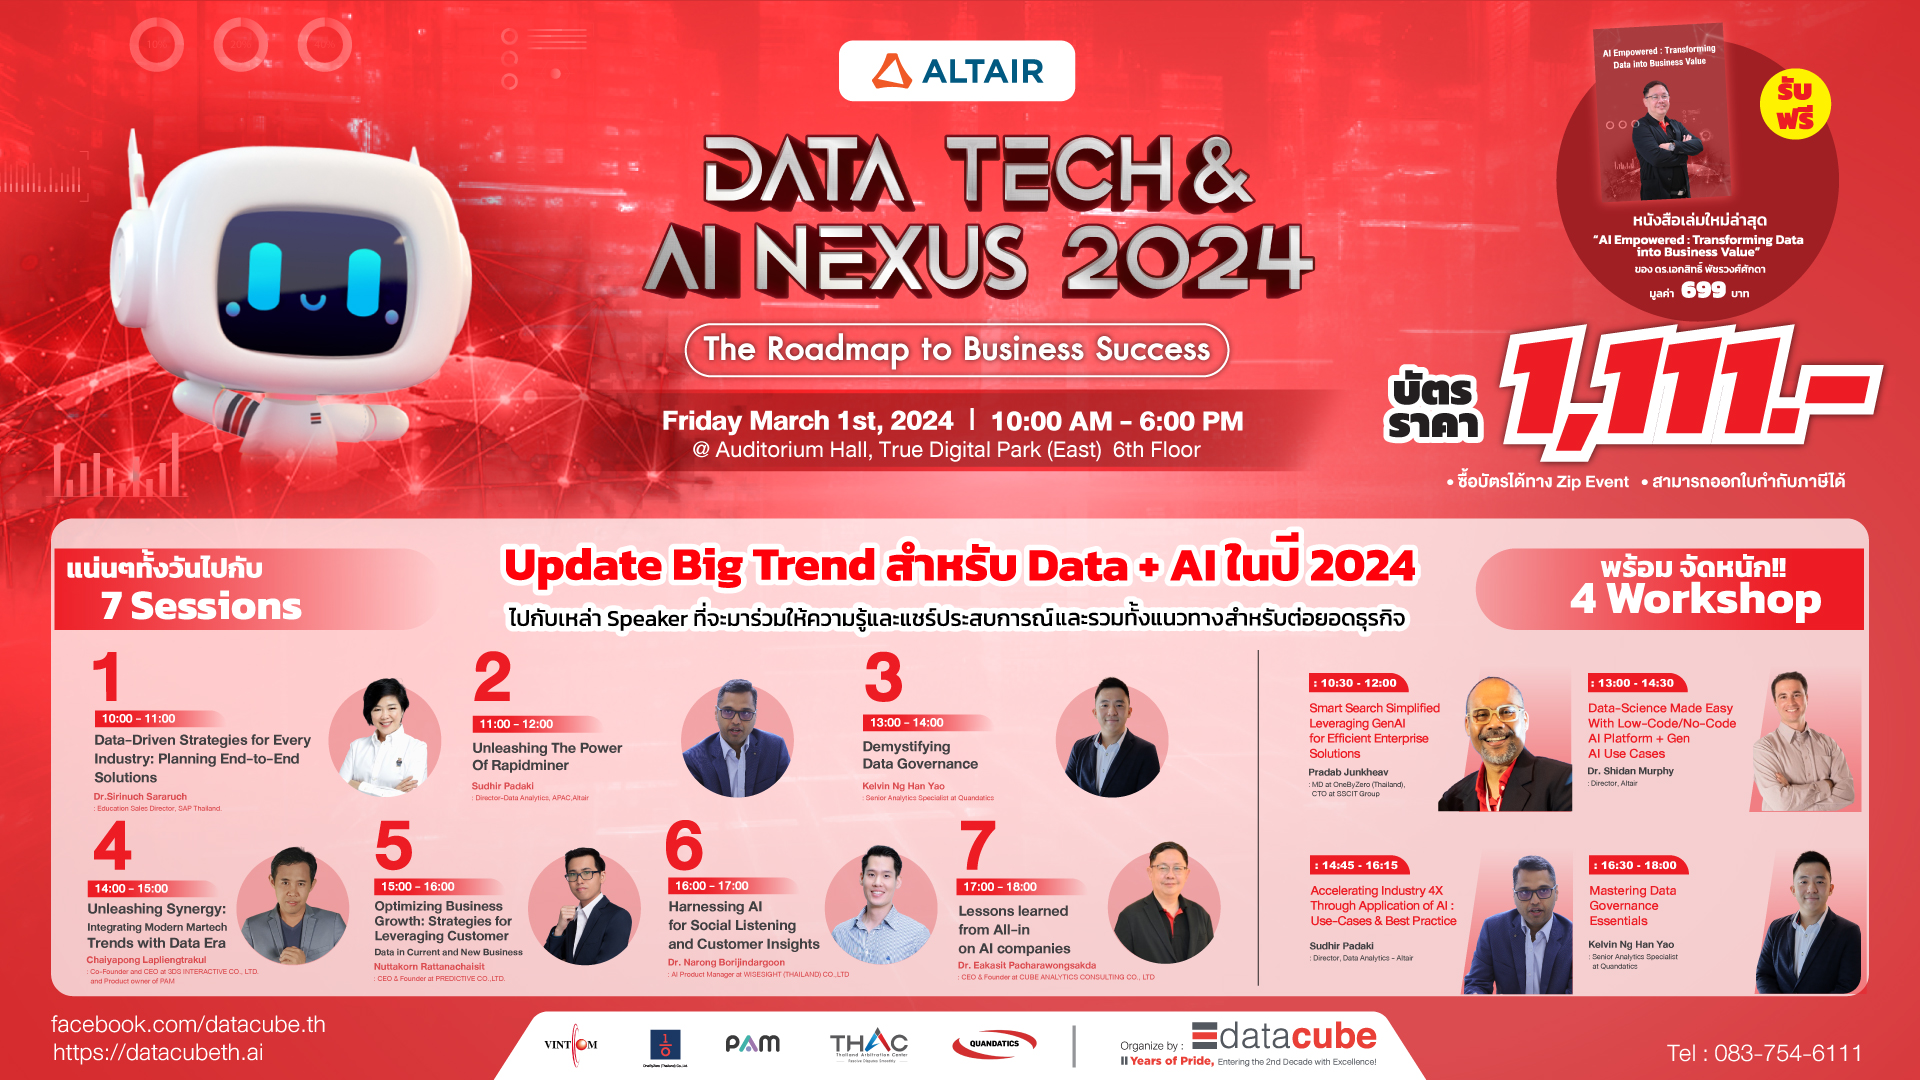 Data Tech & AI Nexus 2024: The Roadmap to Business Success 